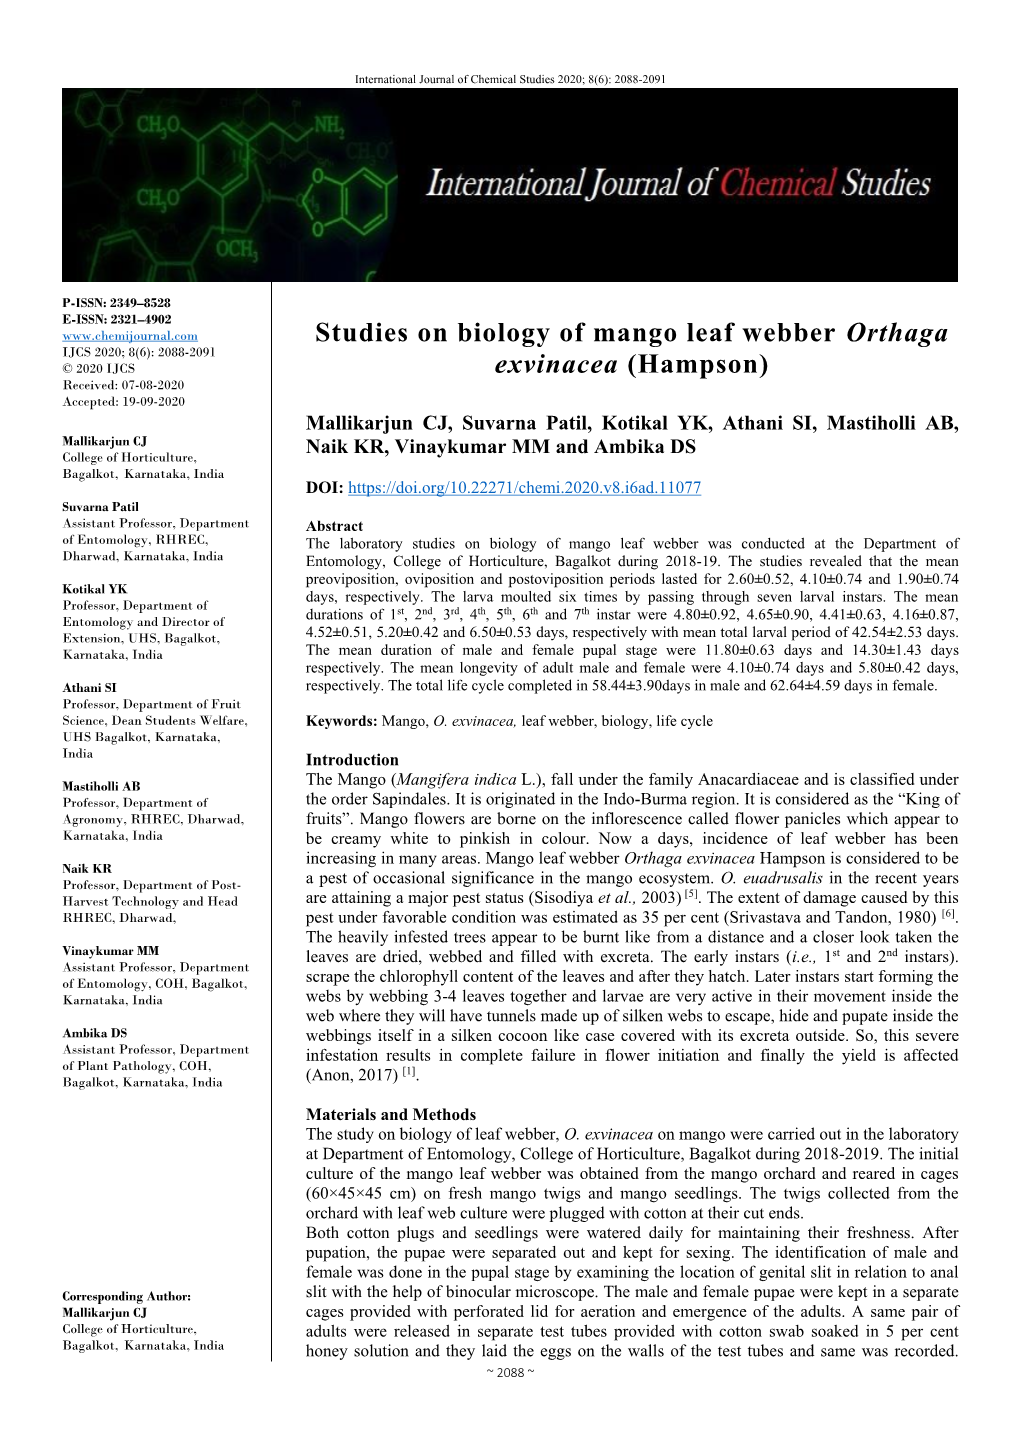 Studies on Biology of Mango Leaf Webber Orthaga Exvinacea